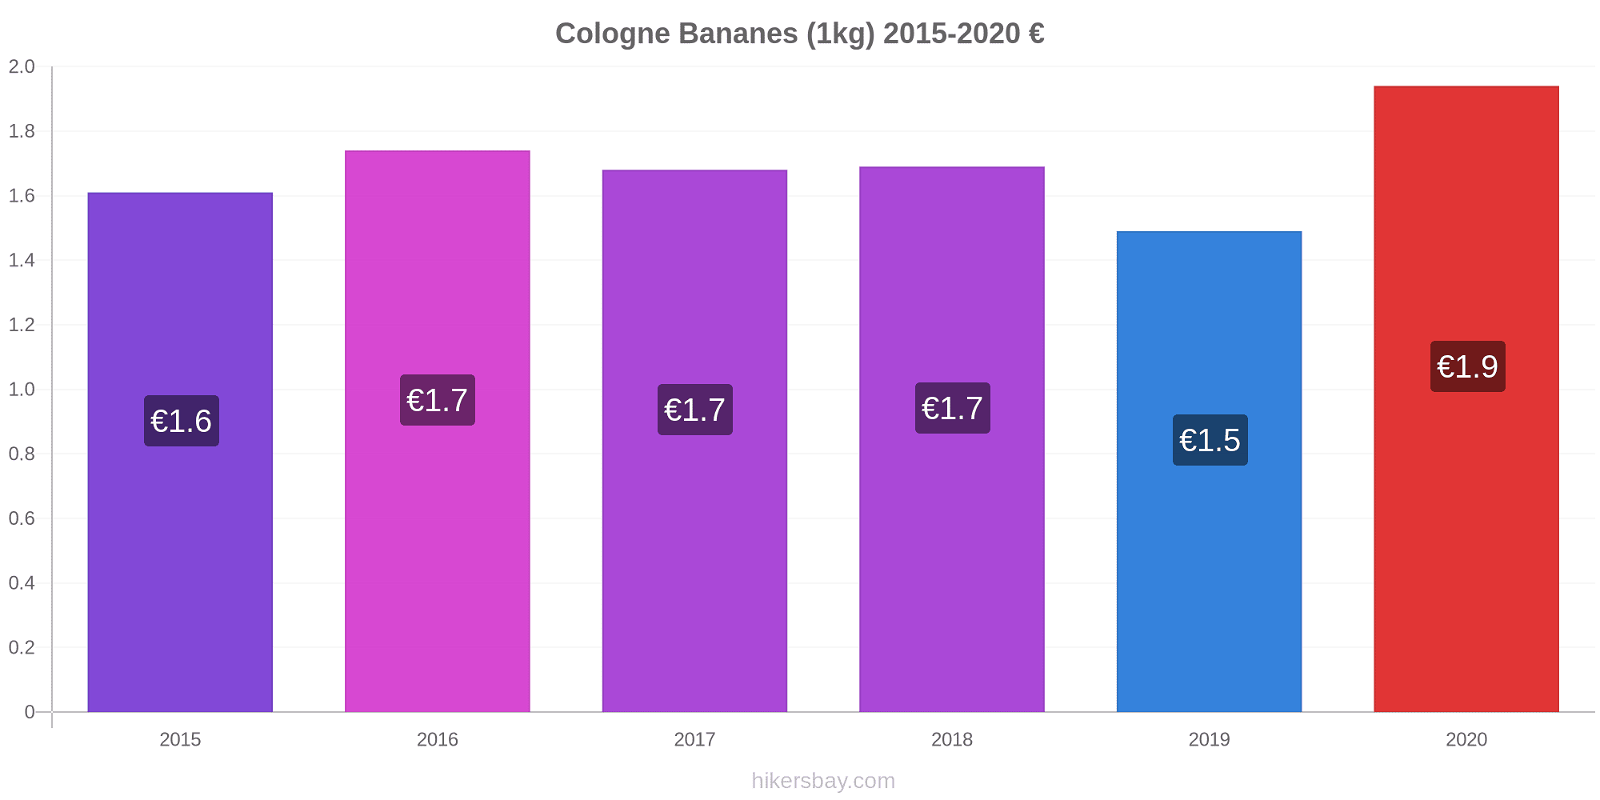 Cologne changements de prix Bananes (1kg) hikersbay.com